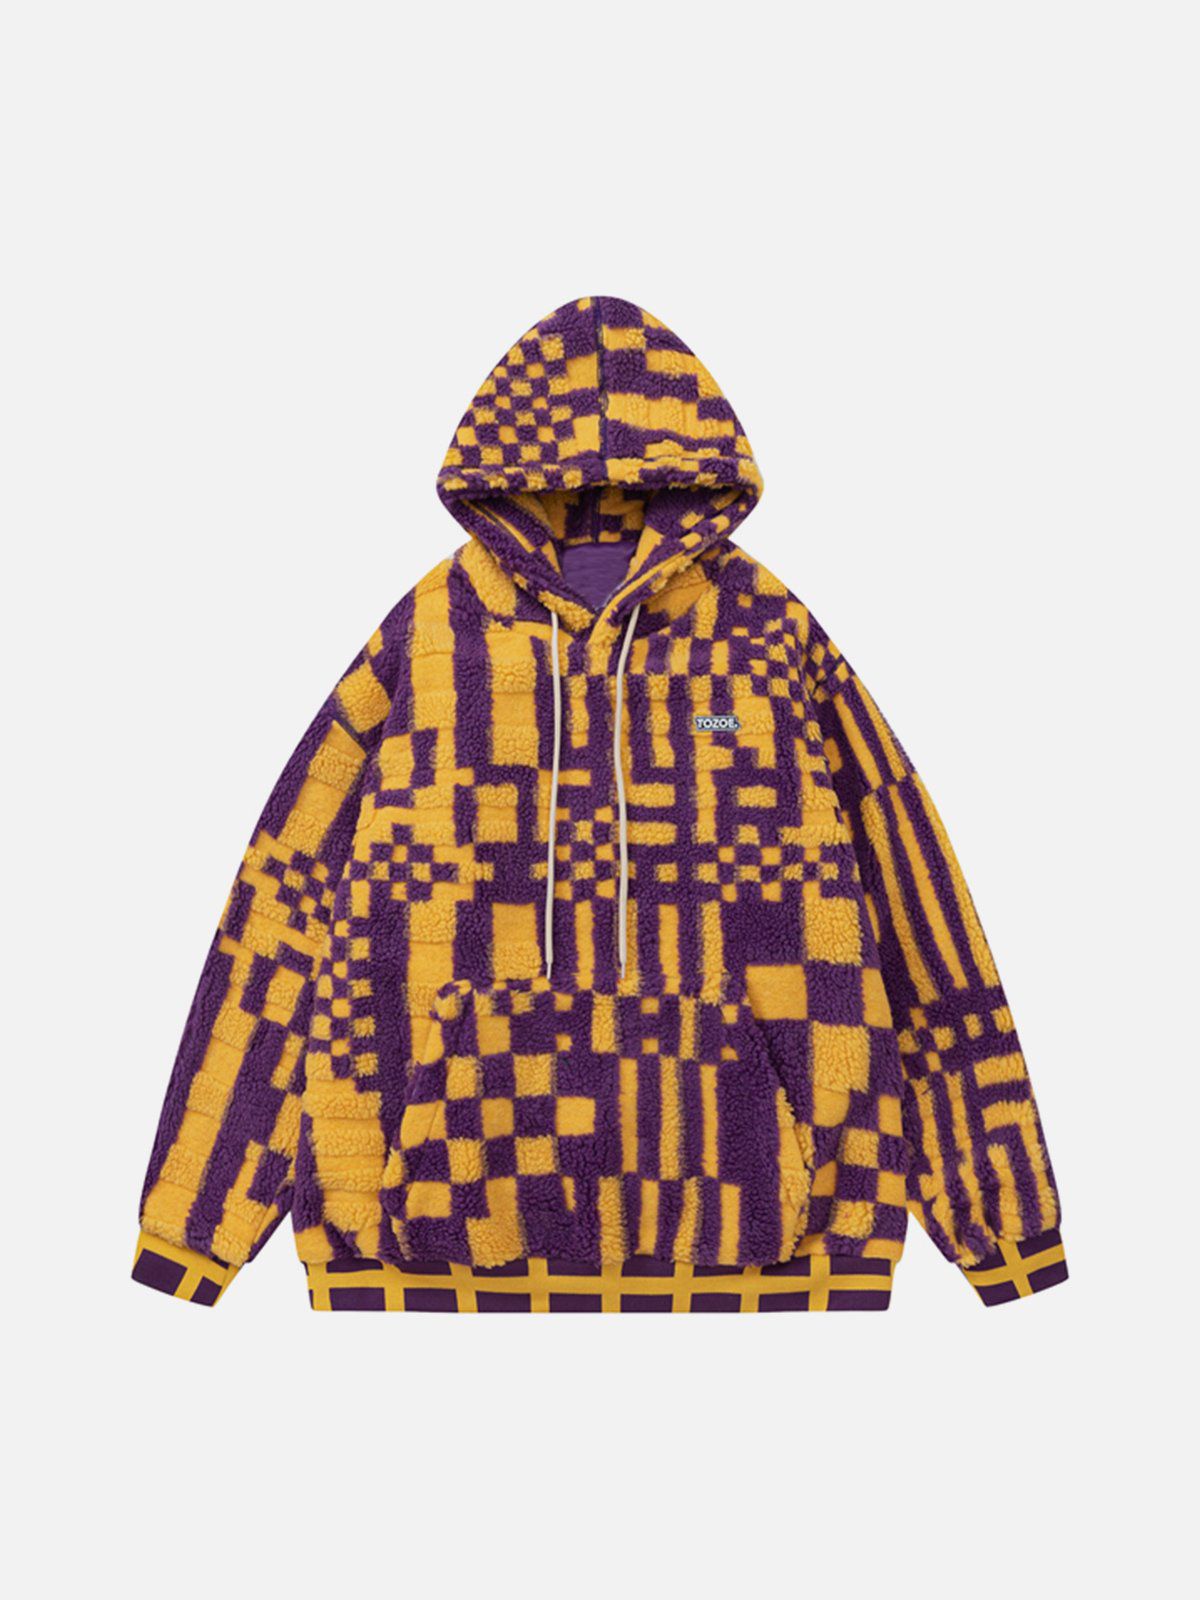 Majesda® - Pixel Stripe Hooded Sherpa Coat outfit ideas, streetwear fashion - majesda.com